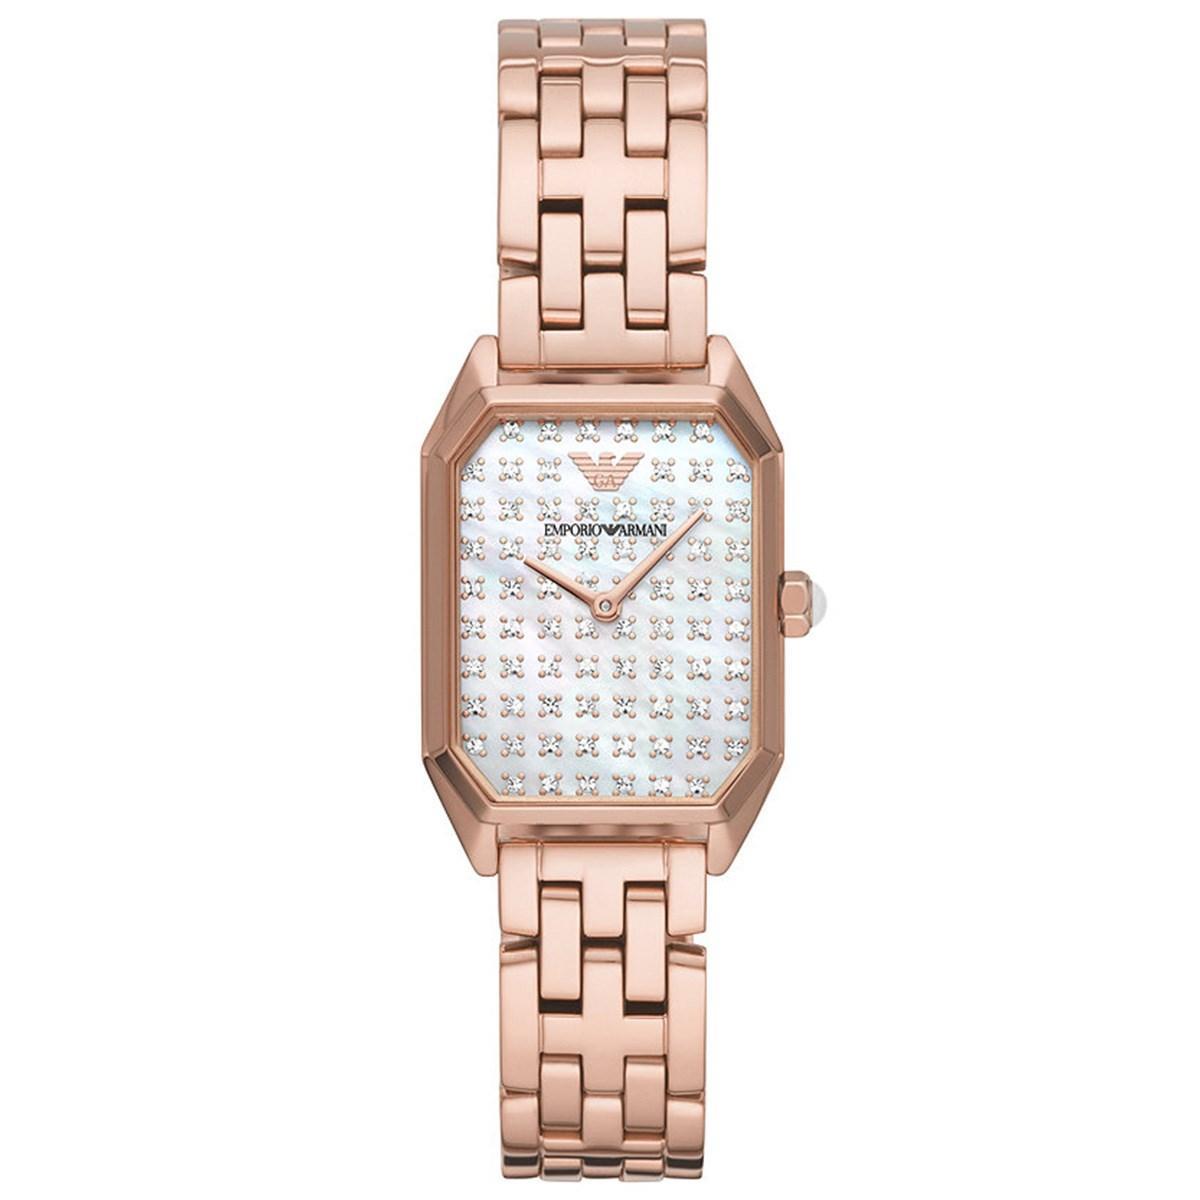 Women's watch, 24mm case - EMPORIO ARMANI